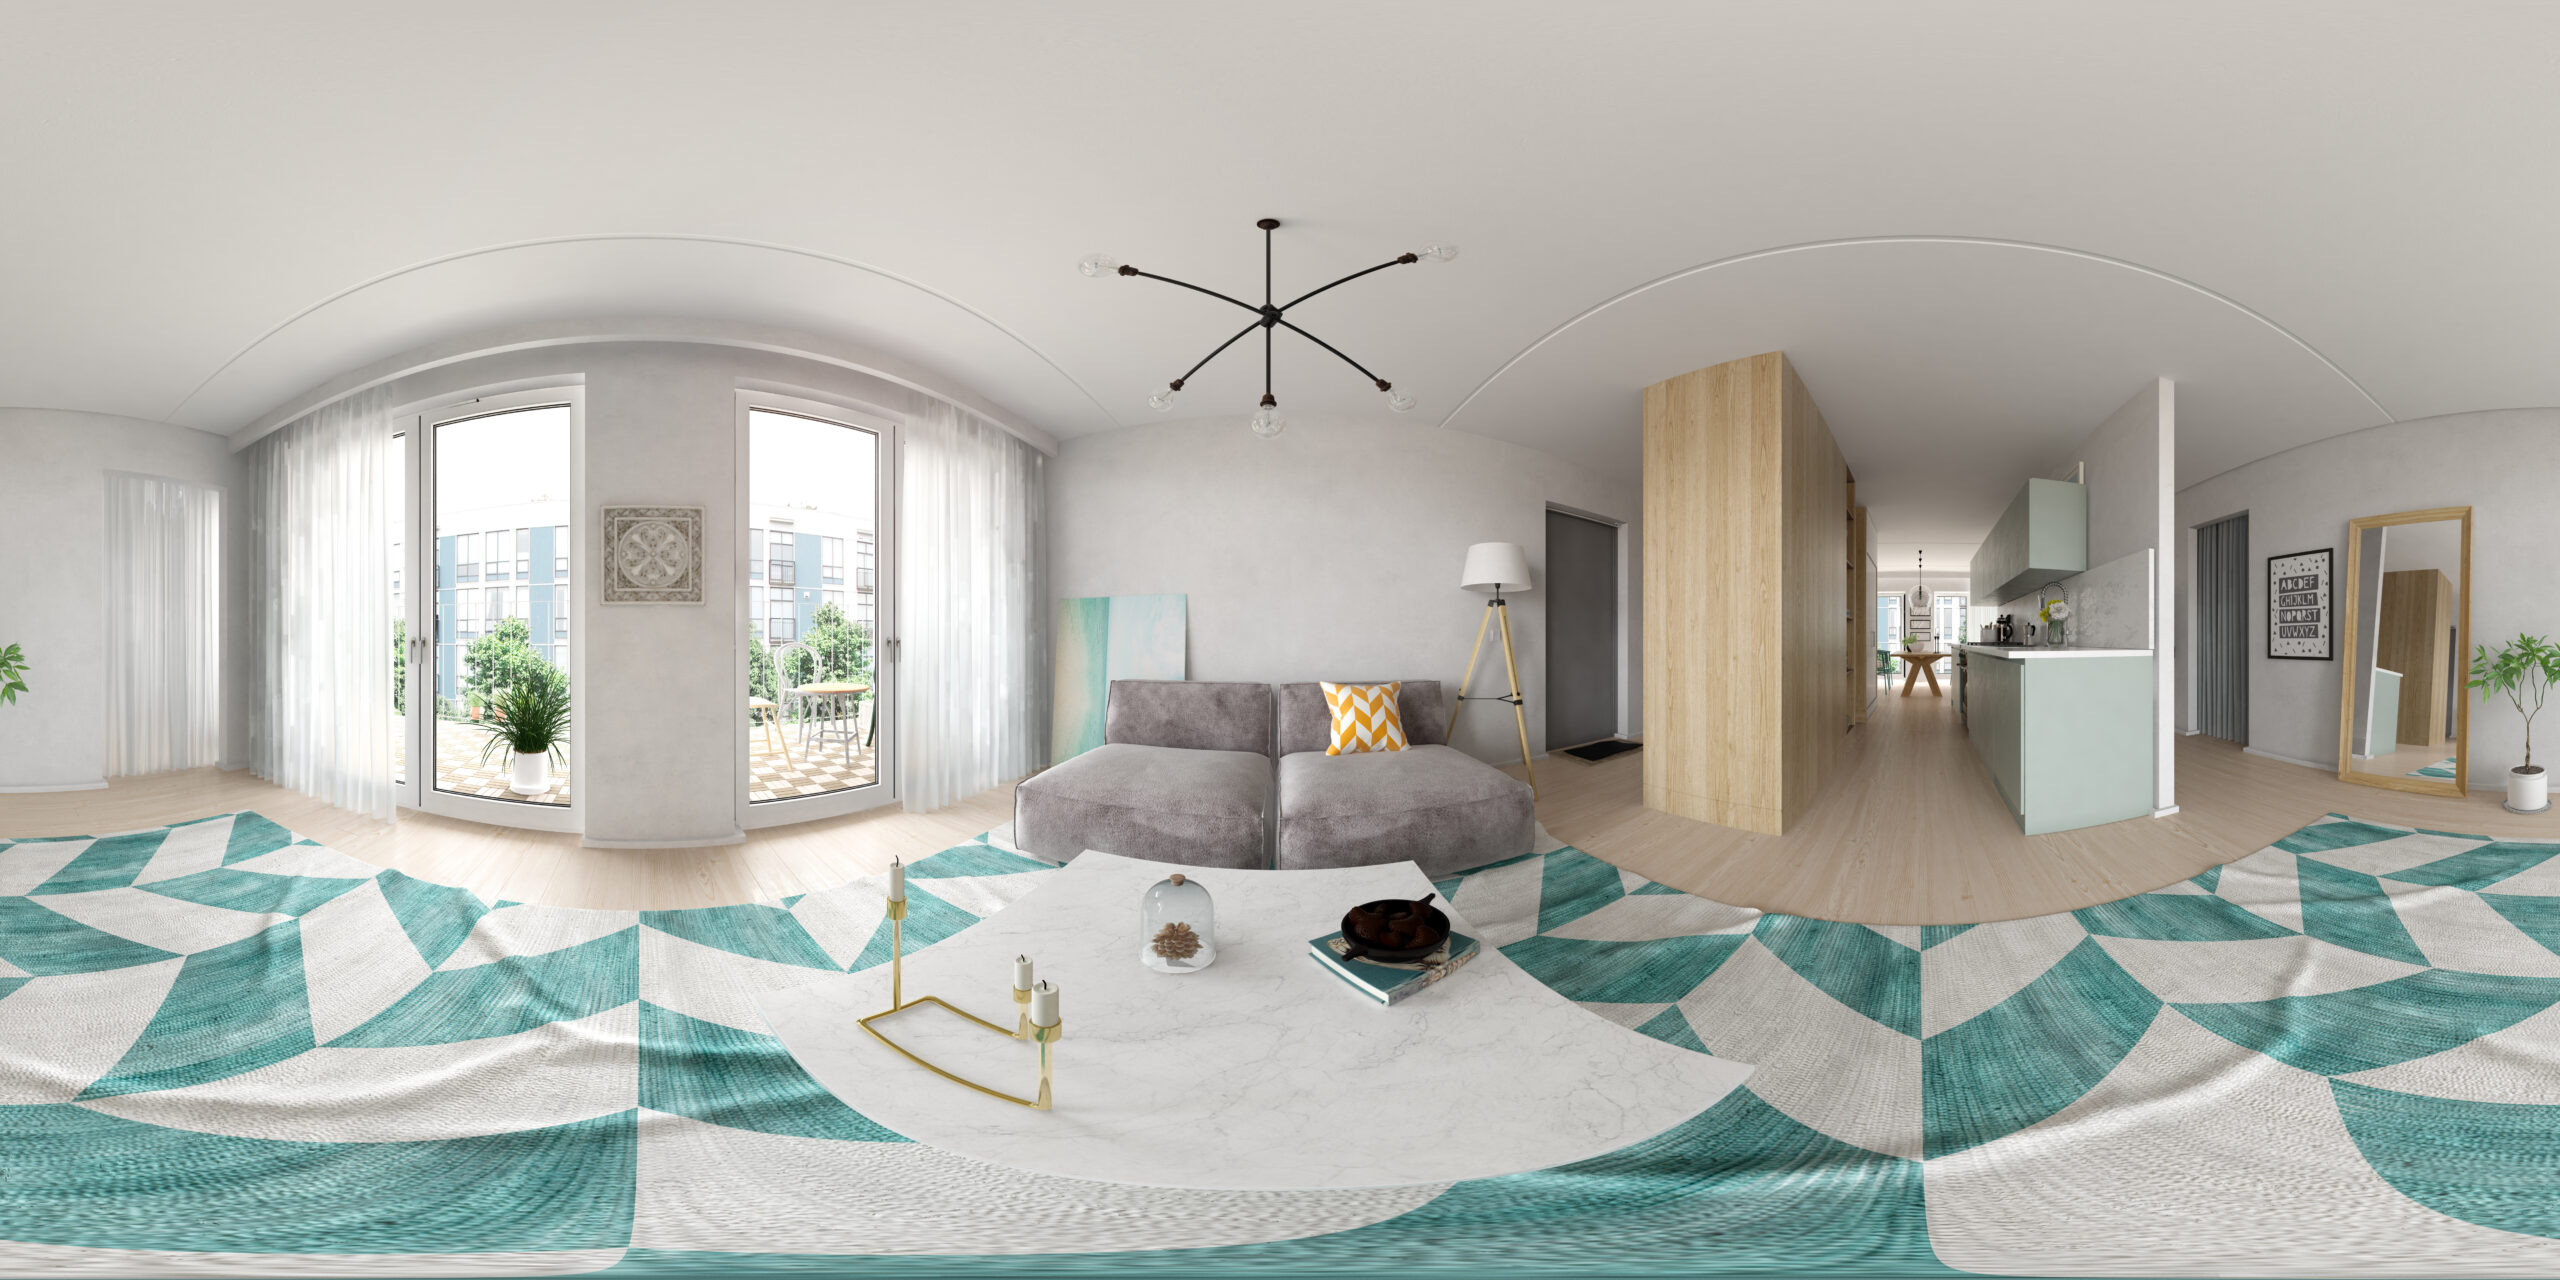 Spherical 360 panorama projection Scandinavian style interior design